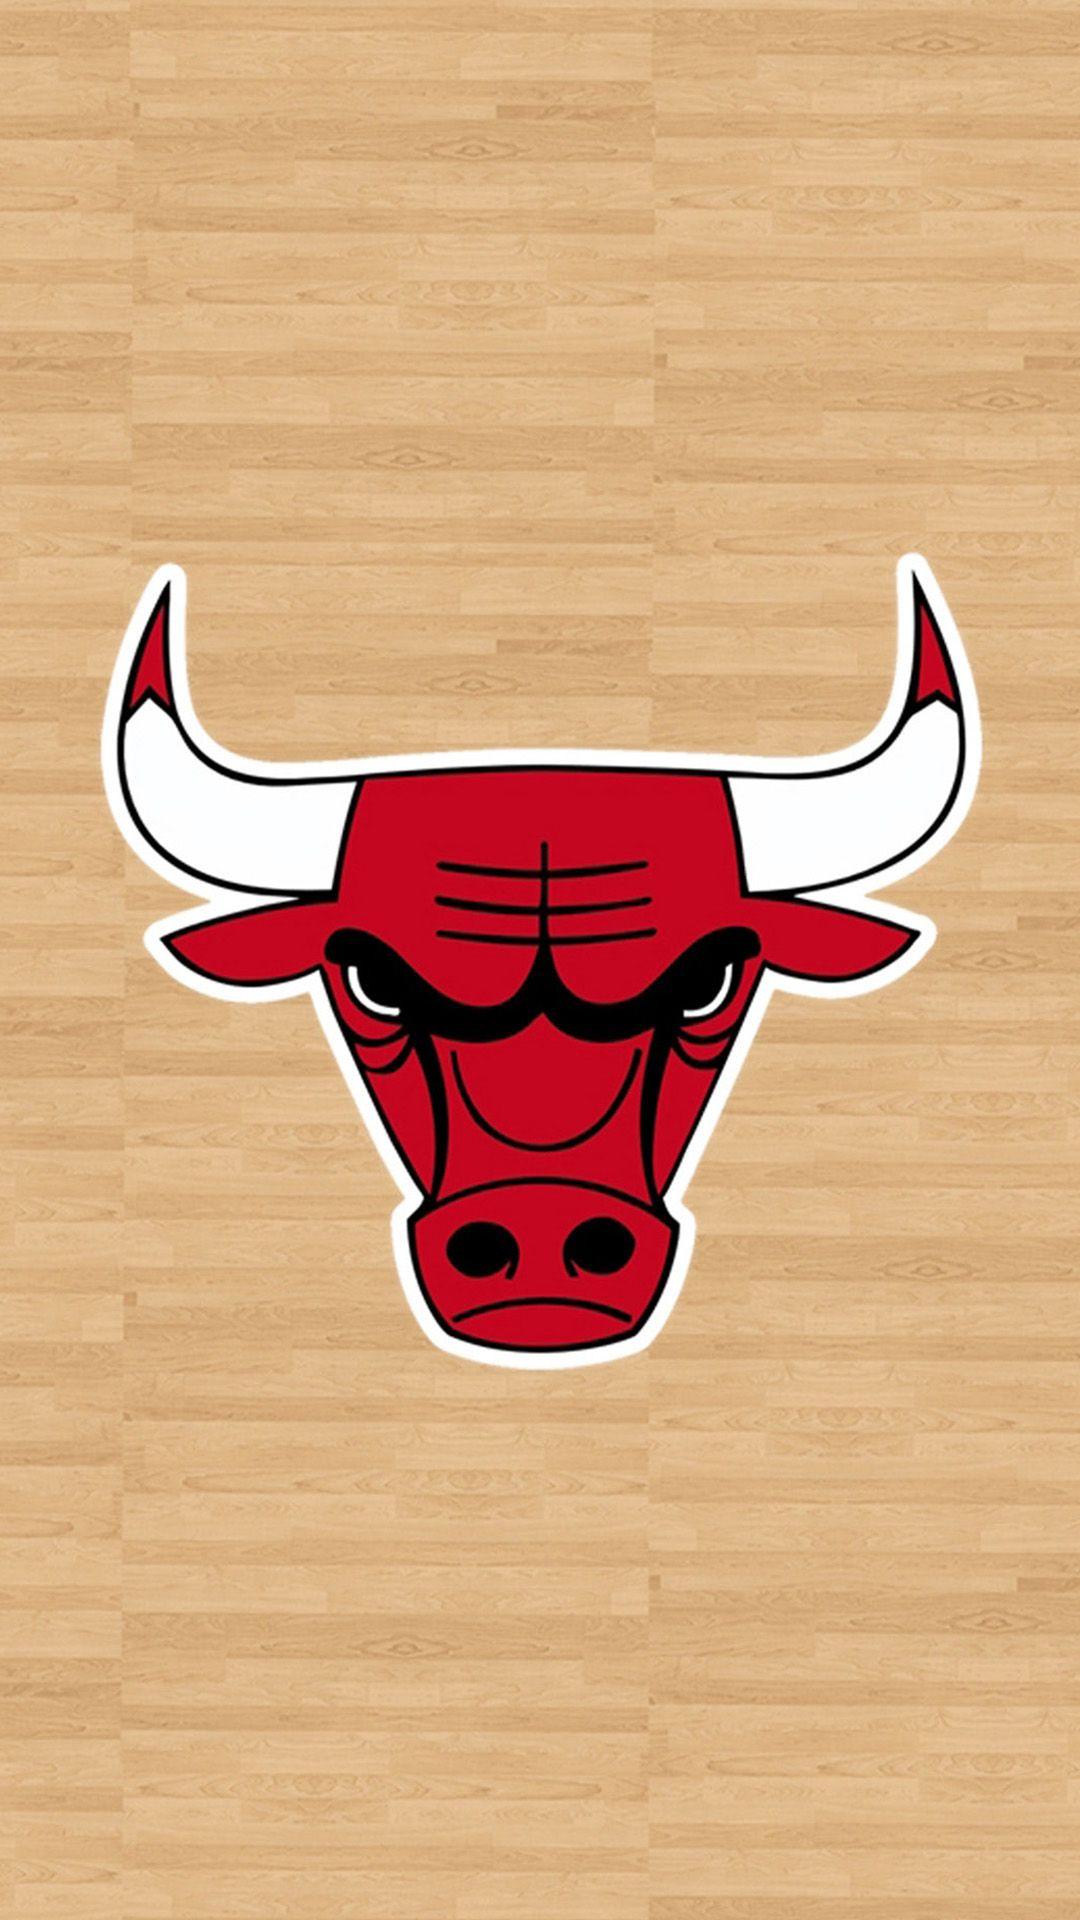 Chicago Bulls on X: A few more phone wallpaper options for you! 📸  @DeMar_DeRozan